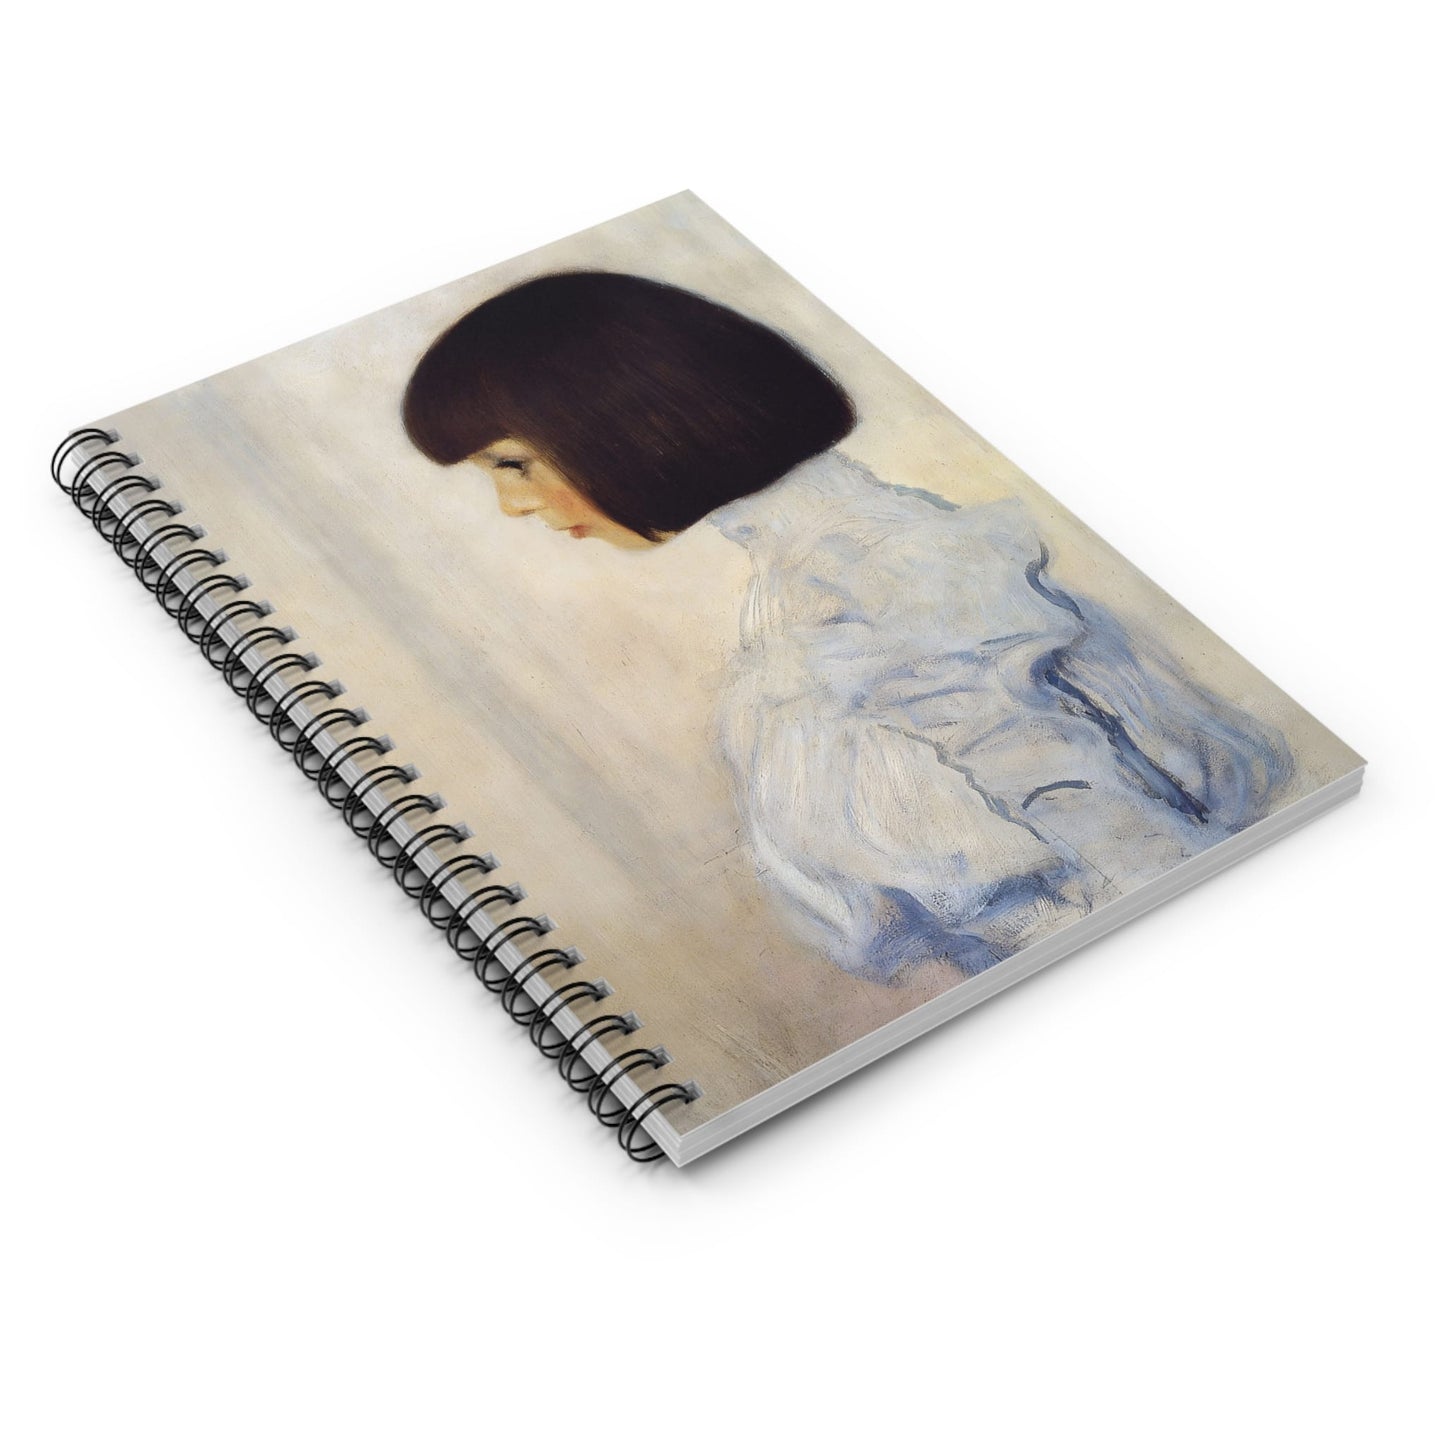 Victorian Era Portrait Spiral Notebook Laying Flat on White Surface